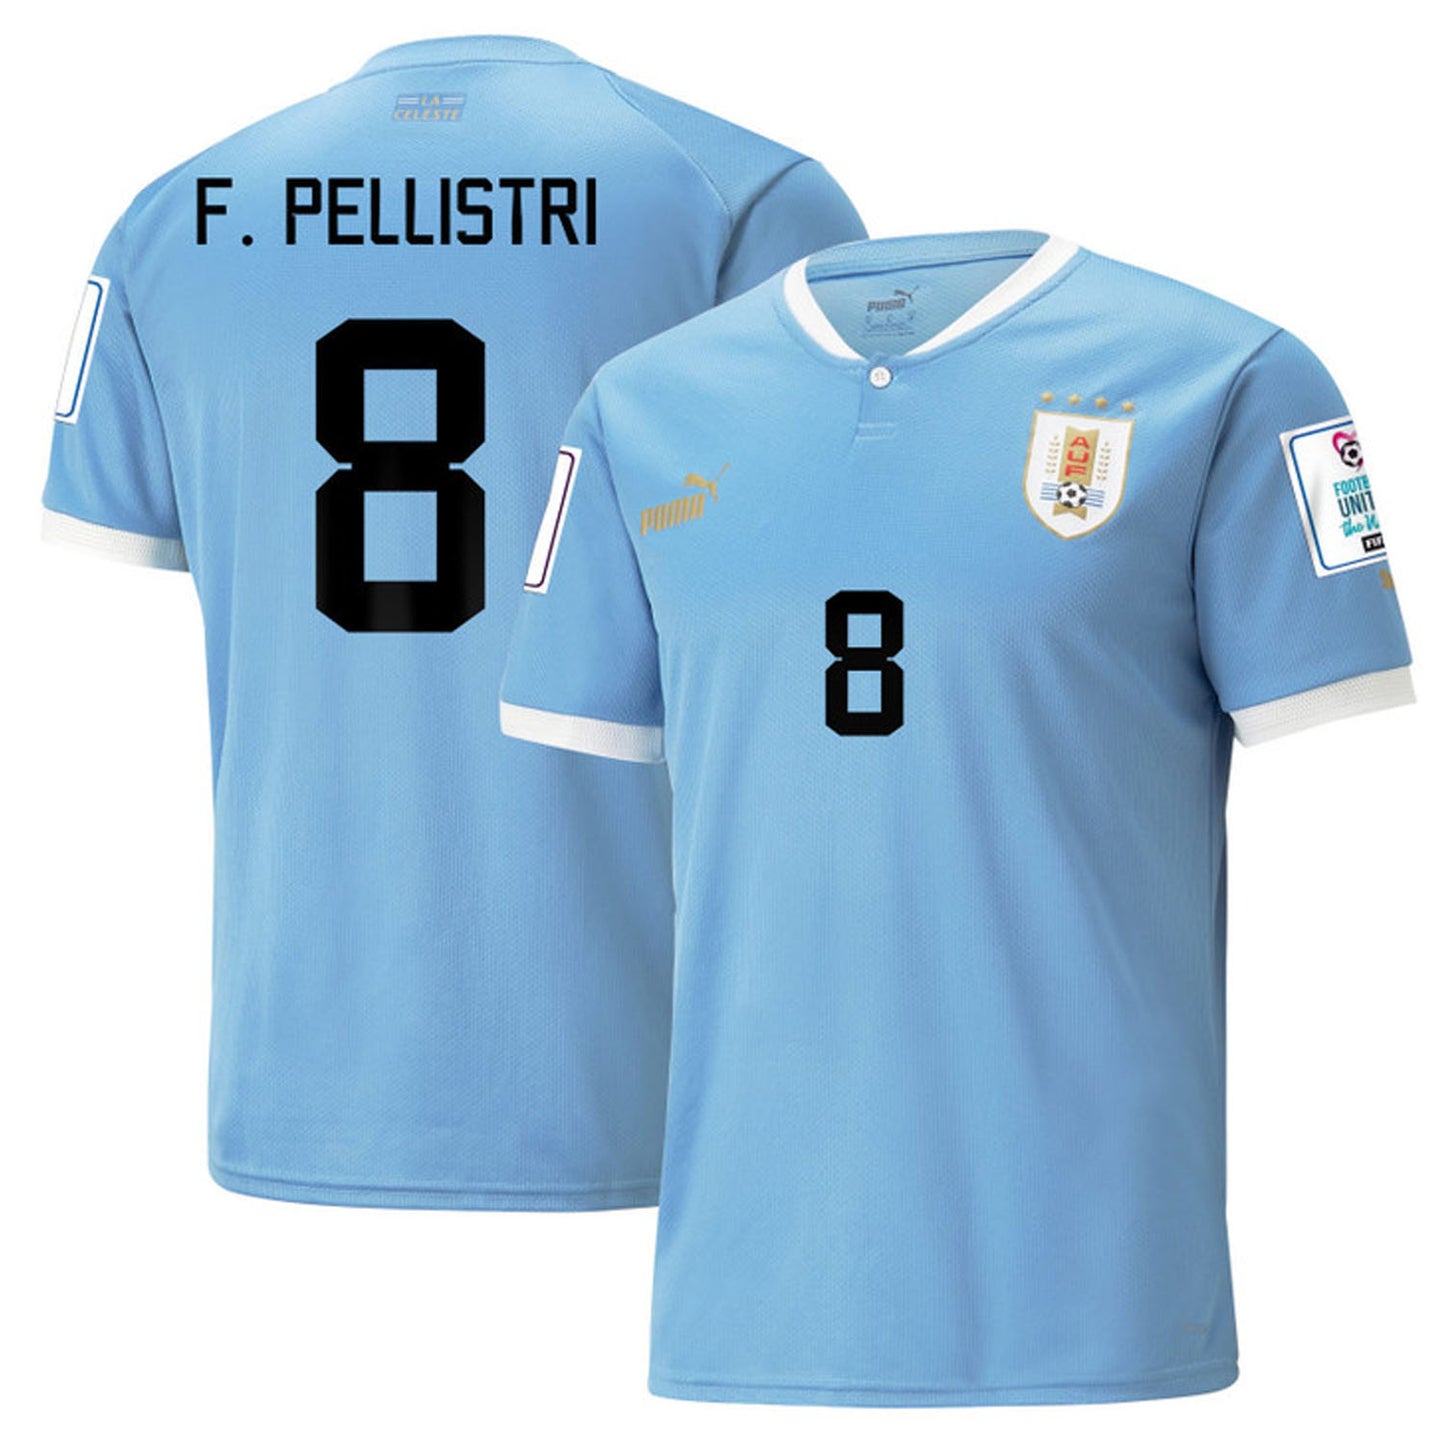 Facundo Pellistri Uruguay 8 Fifa World Cup Jersey